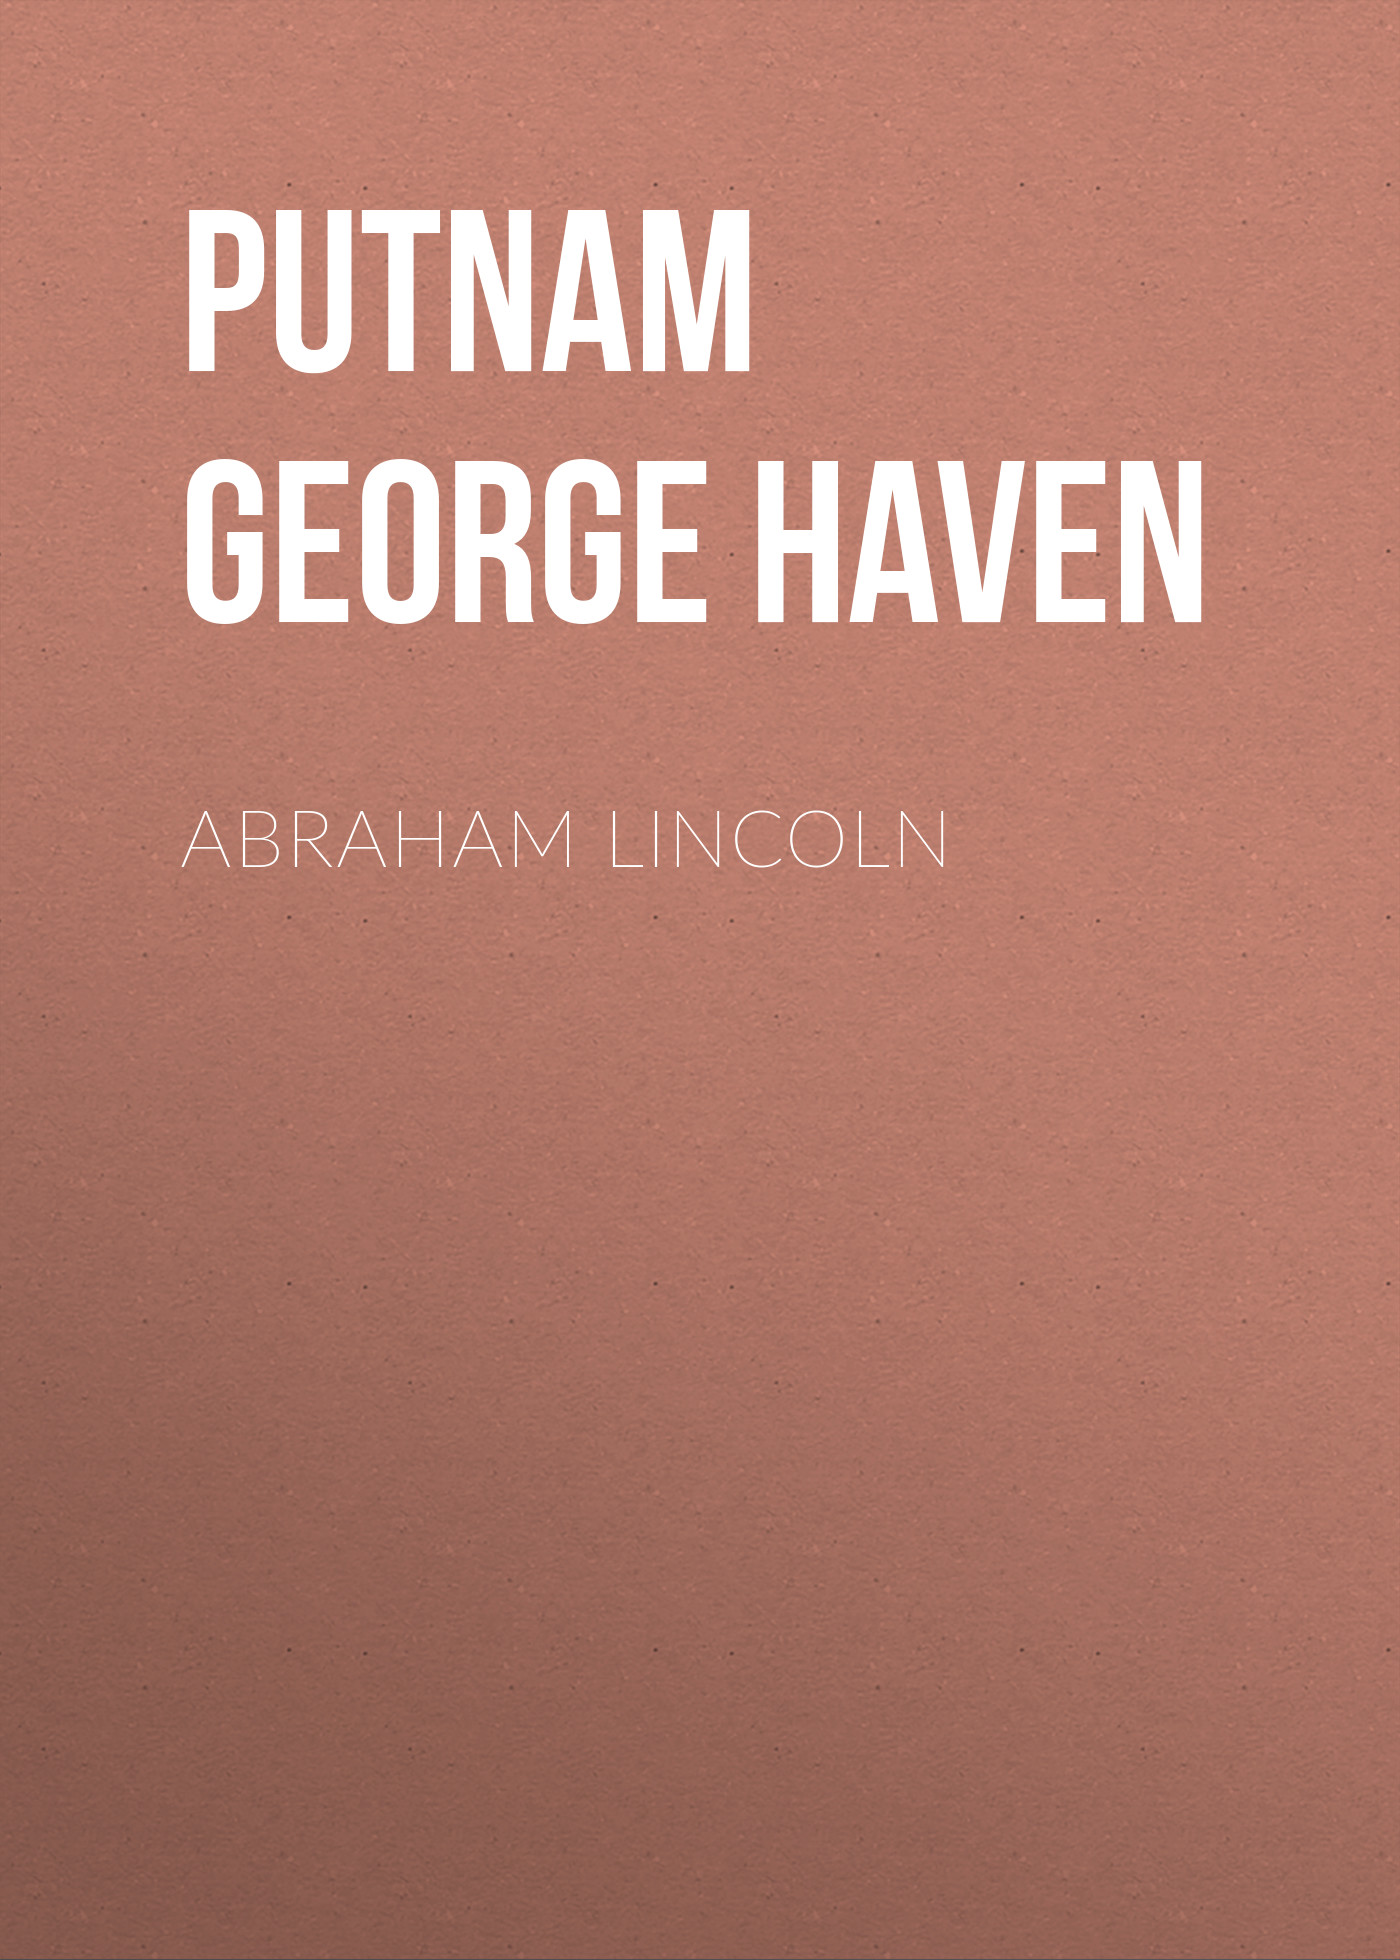 Putnam George Haven Abraham Lincoln